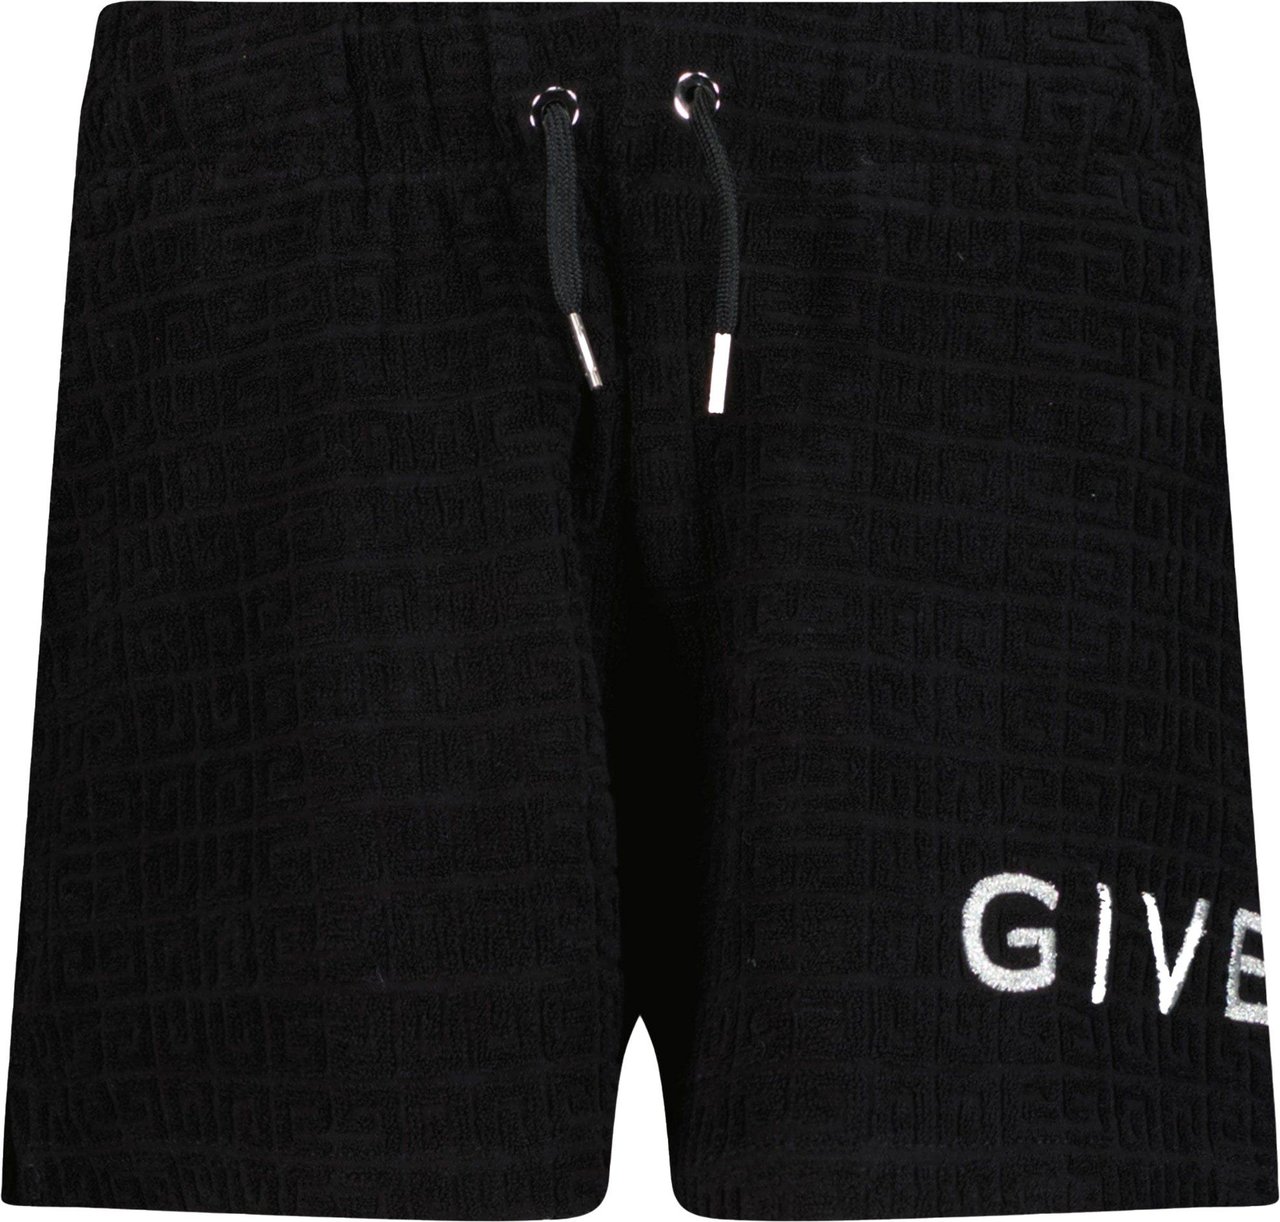 Givenchy Givenchy Kinder Meisjes Shorts Zwart Zwart